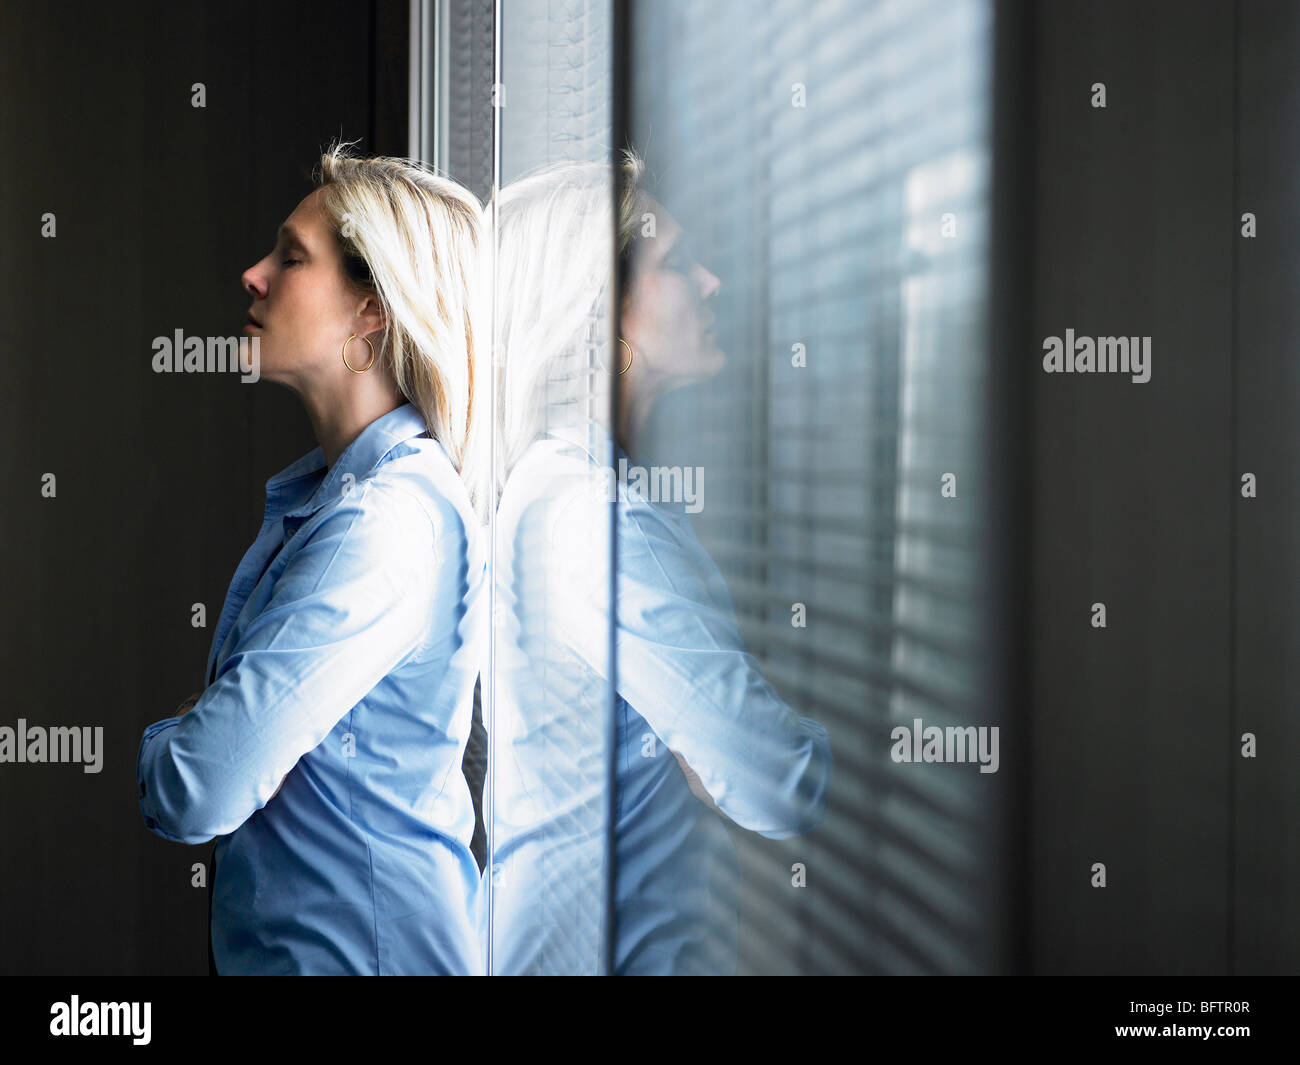 Woman against window, thinking Stock Photo